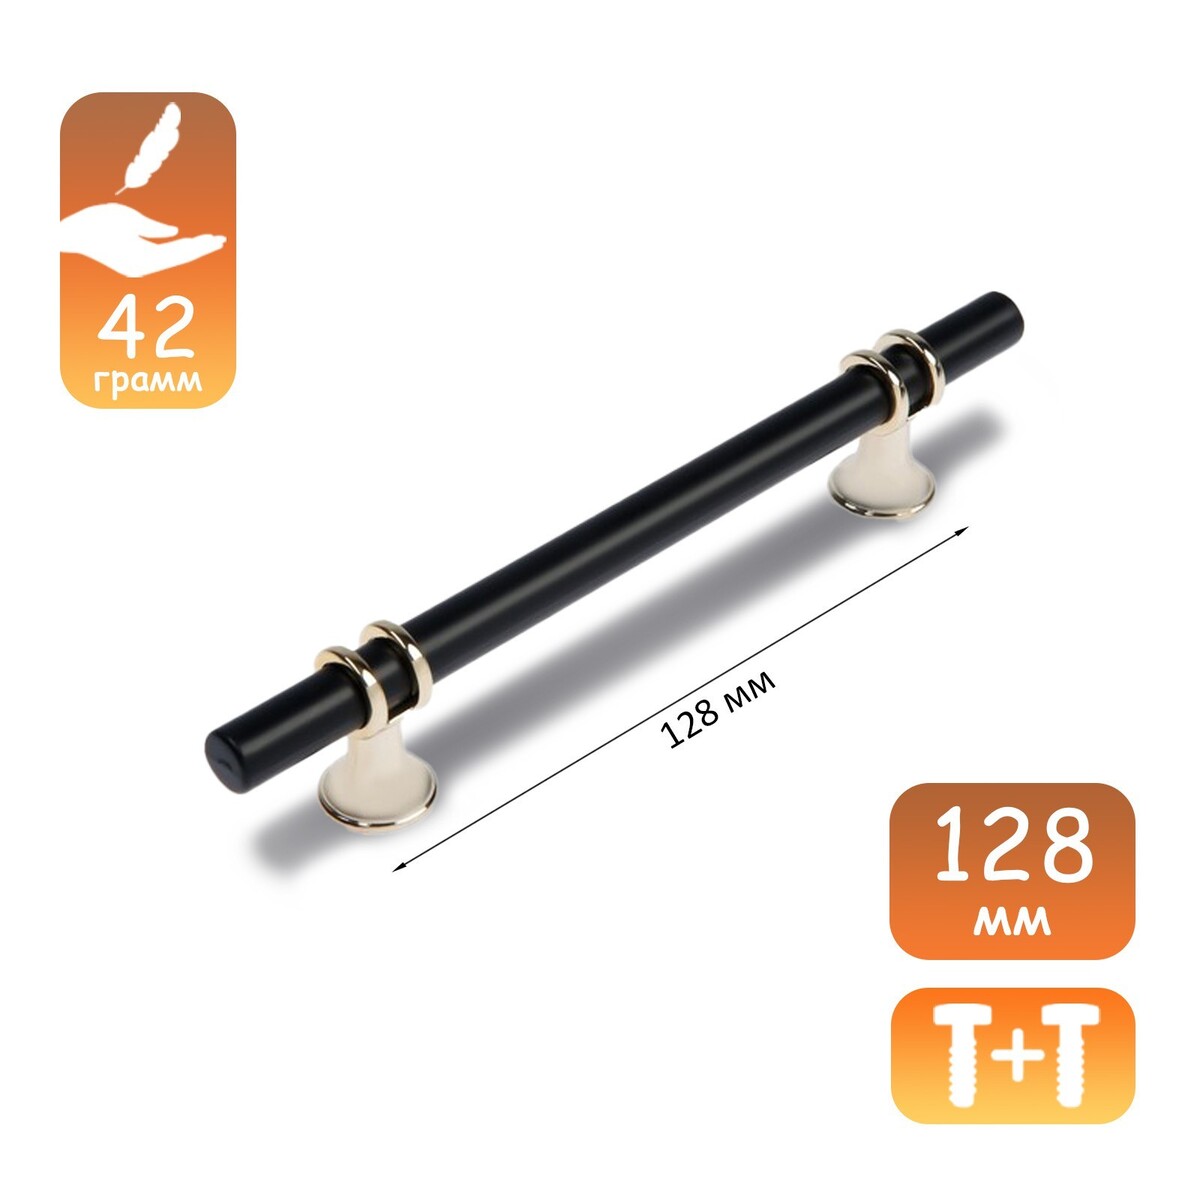 Ручка скоба cappio, м/о 128 мм, d=12 mm, пластик, цвет золото/черный ручка скоба cappio rc232 м о 224